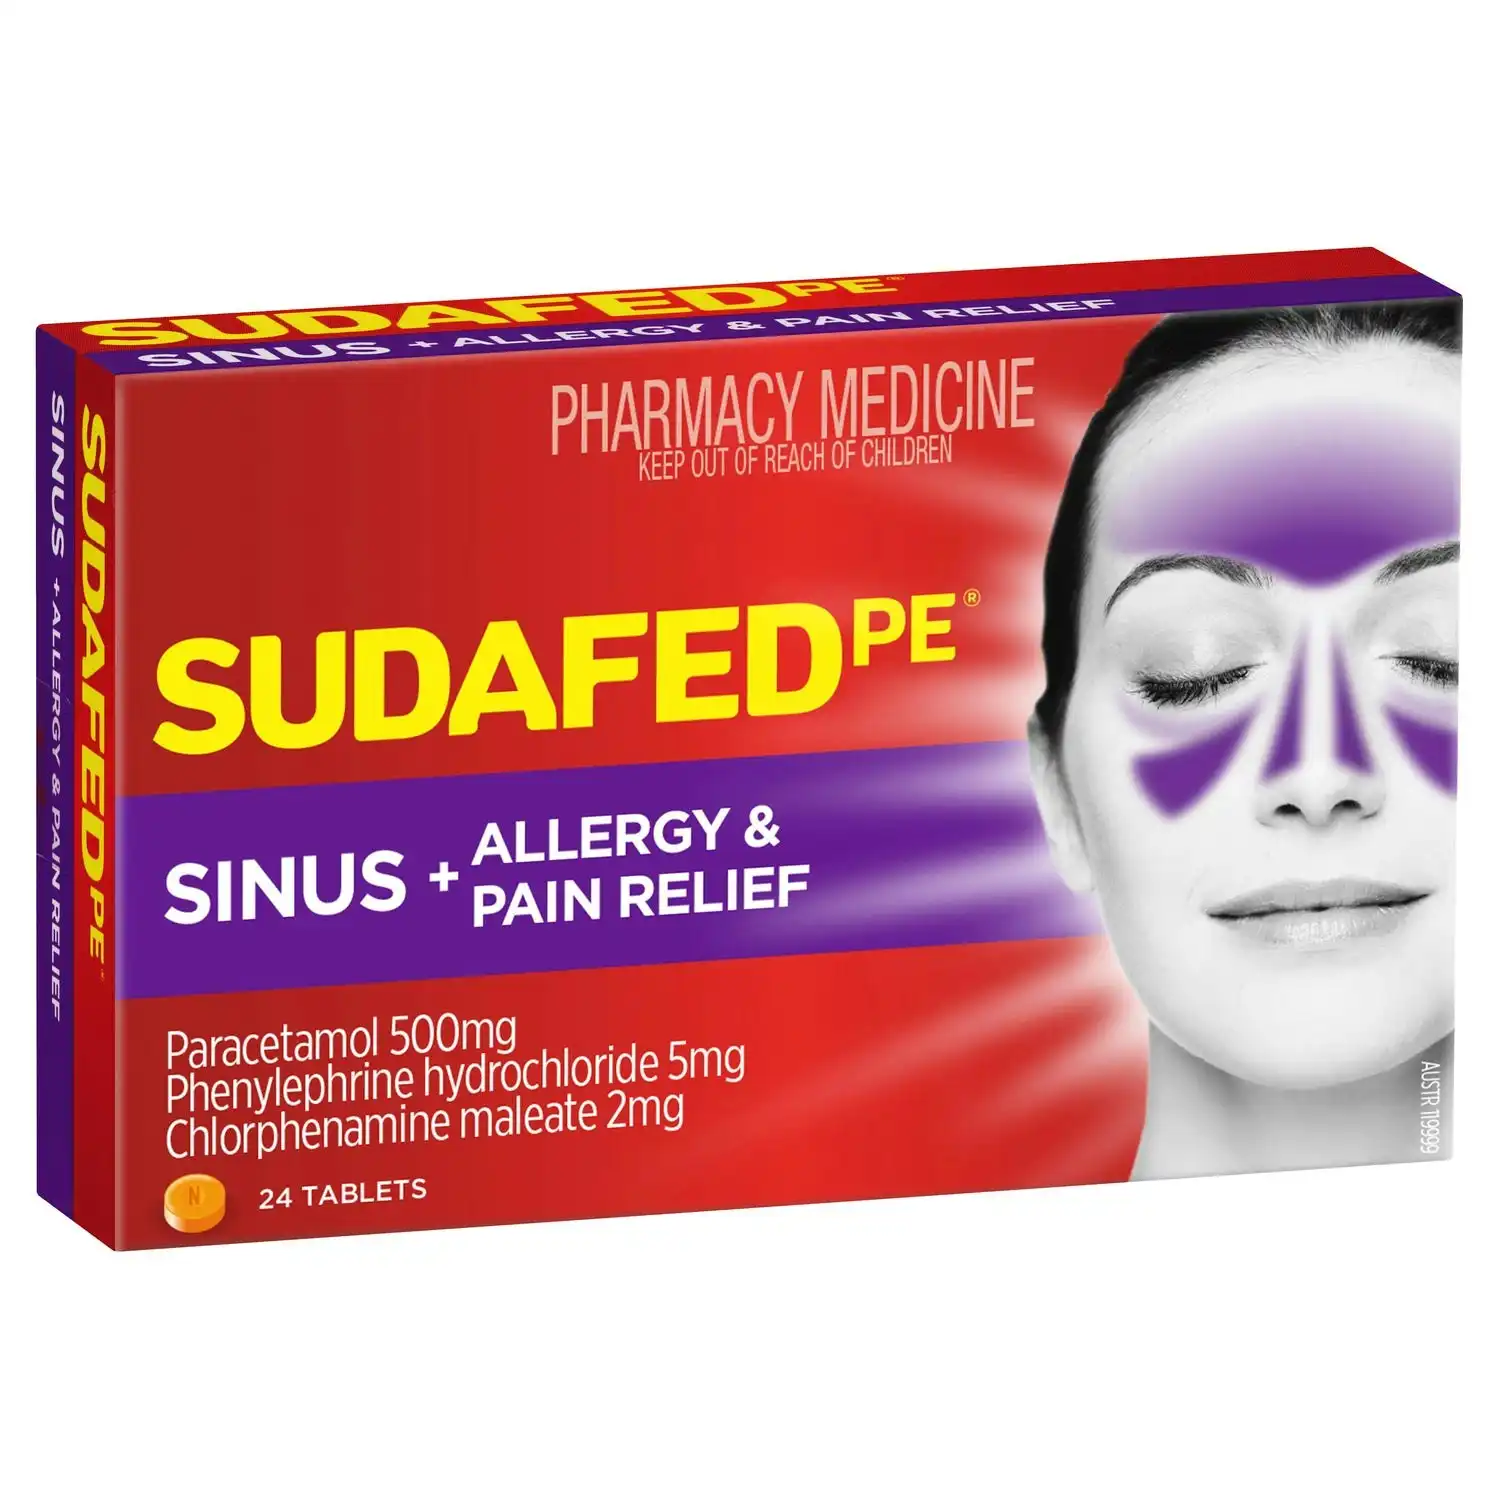 SUDAFED PE Sinus + Allergy & Pain Relief 24 Tabs